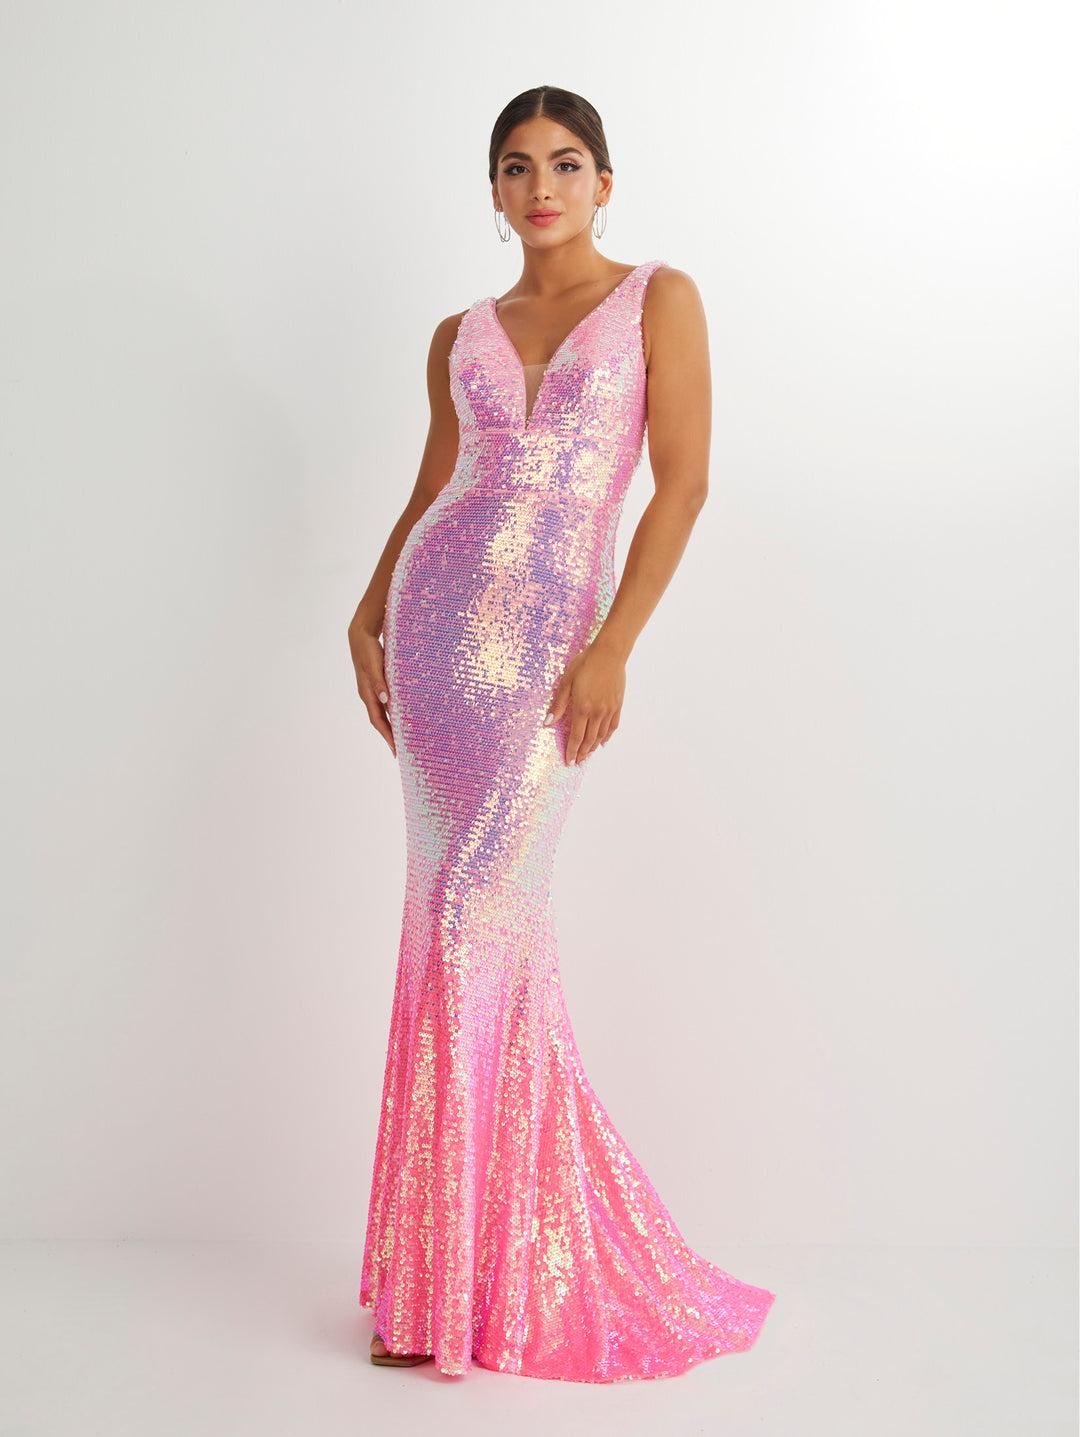 Ombre Sequin Sleeveless Mermaid Dress by Studio 17 12885